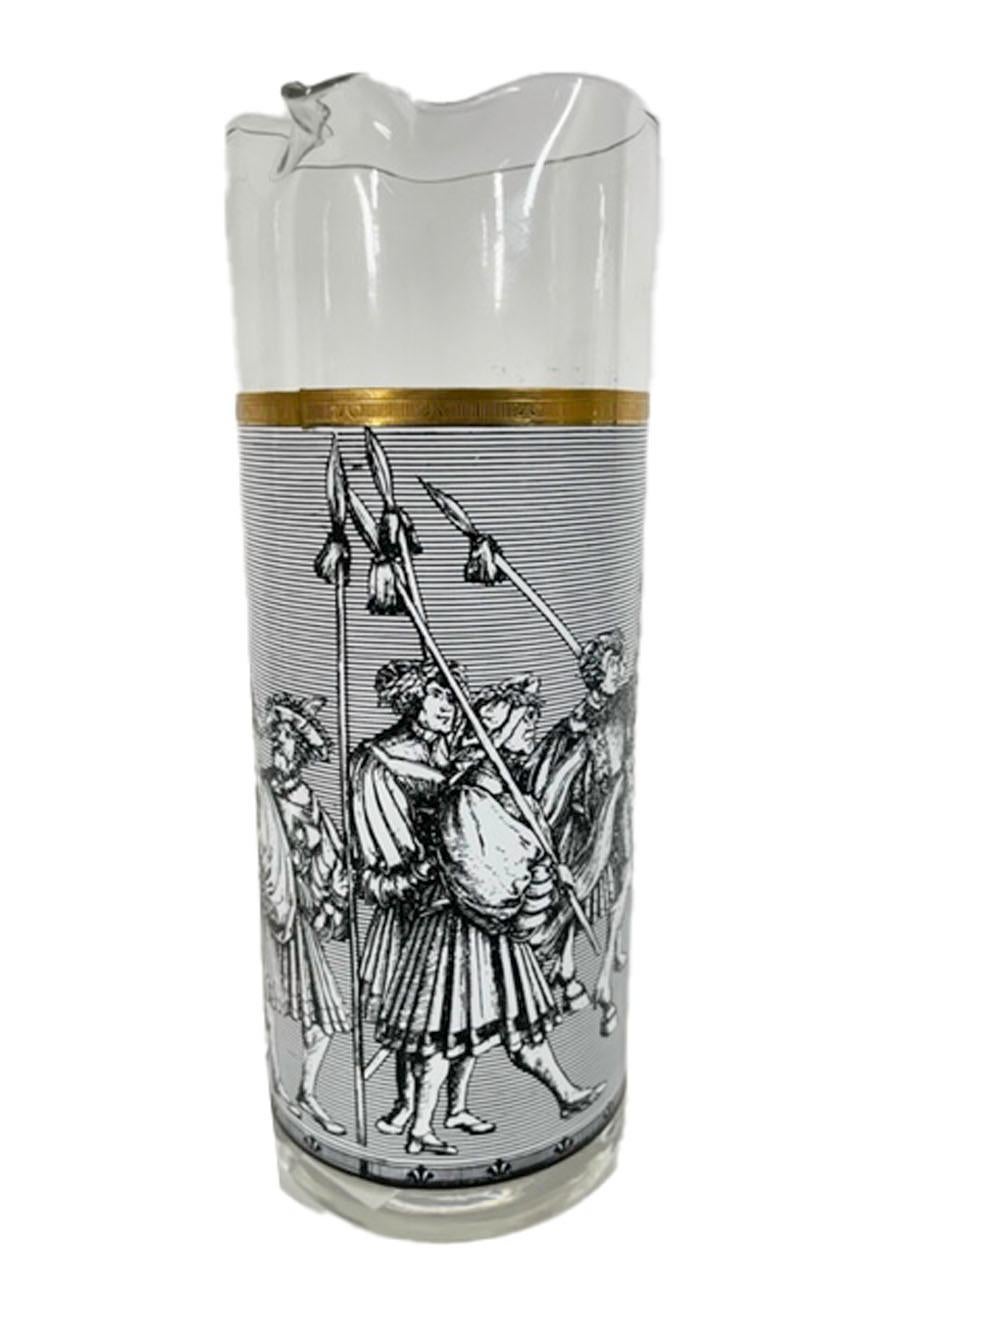 Vintage Cera Glassware Camelot Pattern Cocktail Set in Black and White For Sale 2